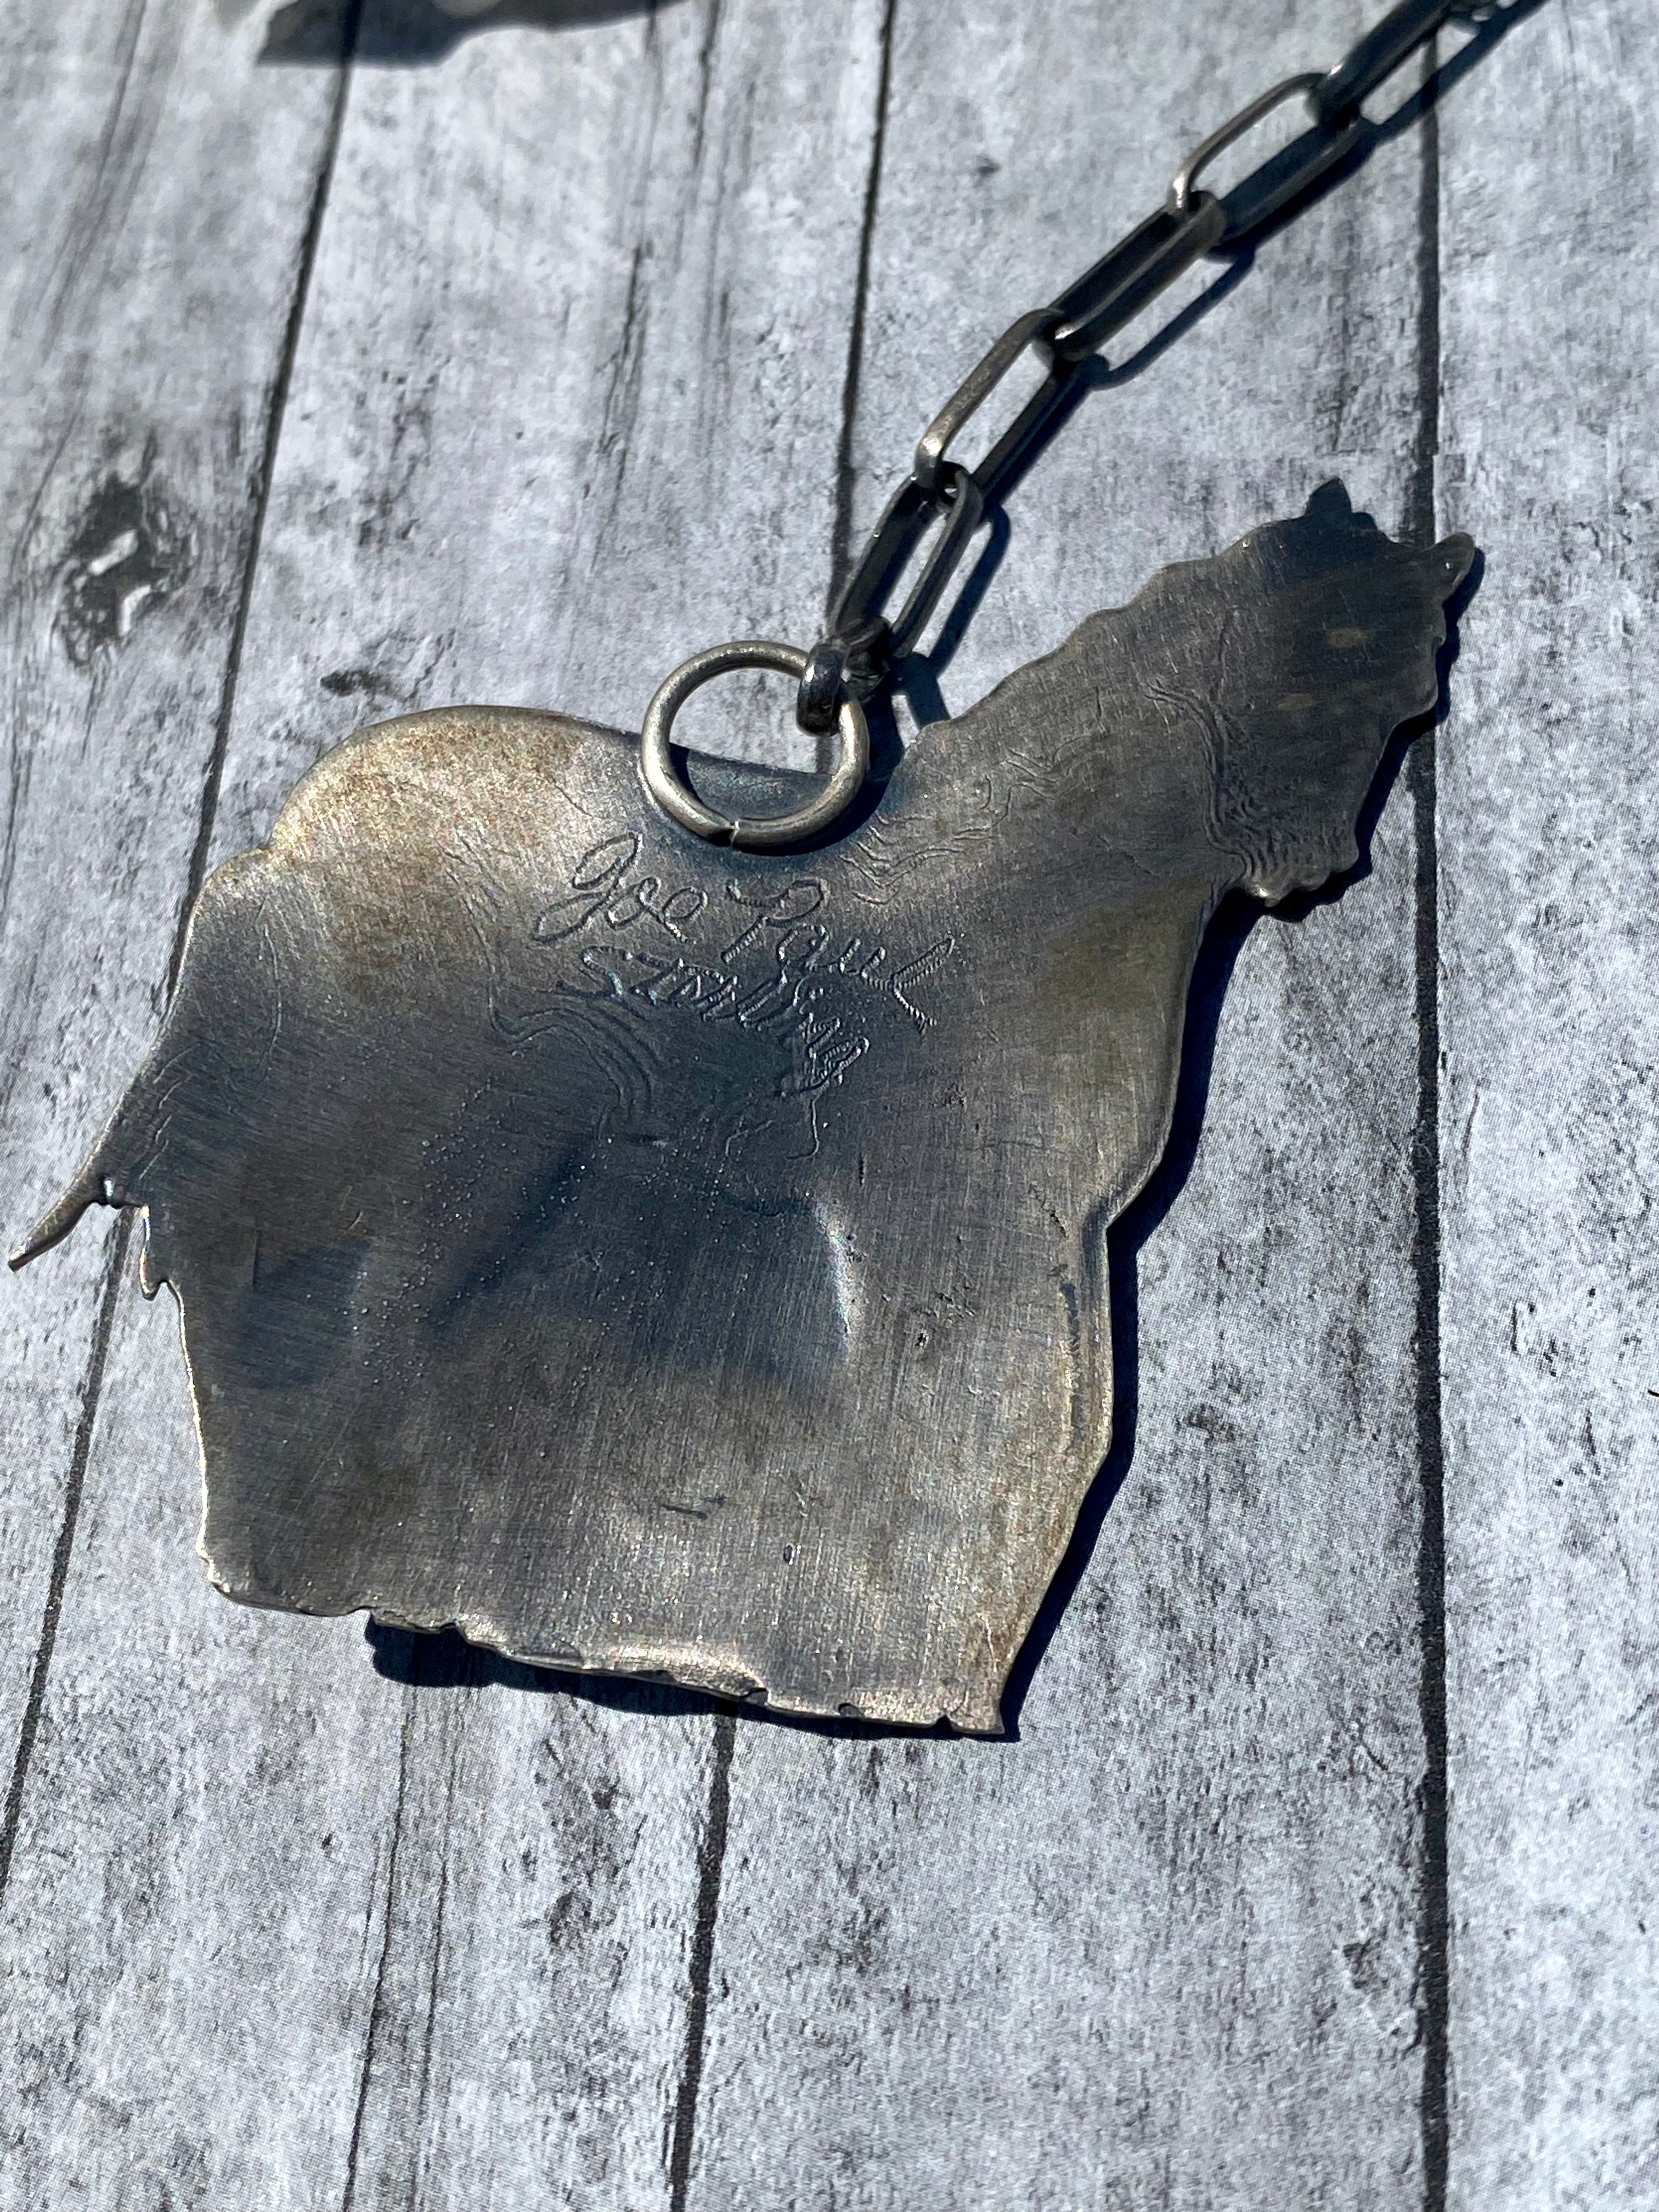 Joe Paul Kingman Turquoise & Sterling Silver Horse Adjustable Necklace